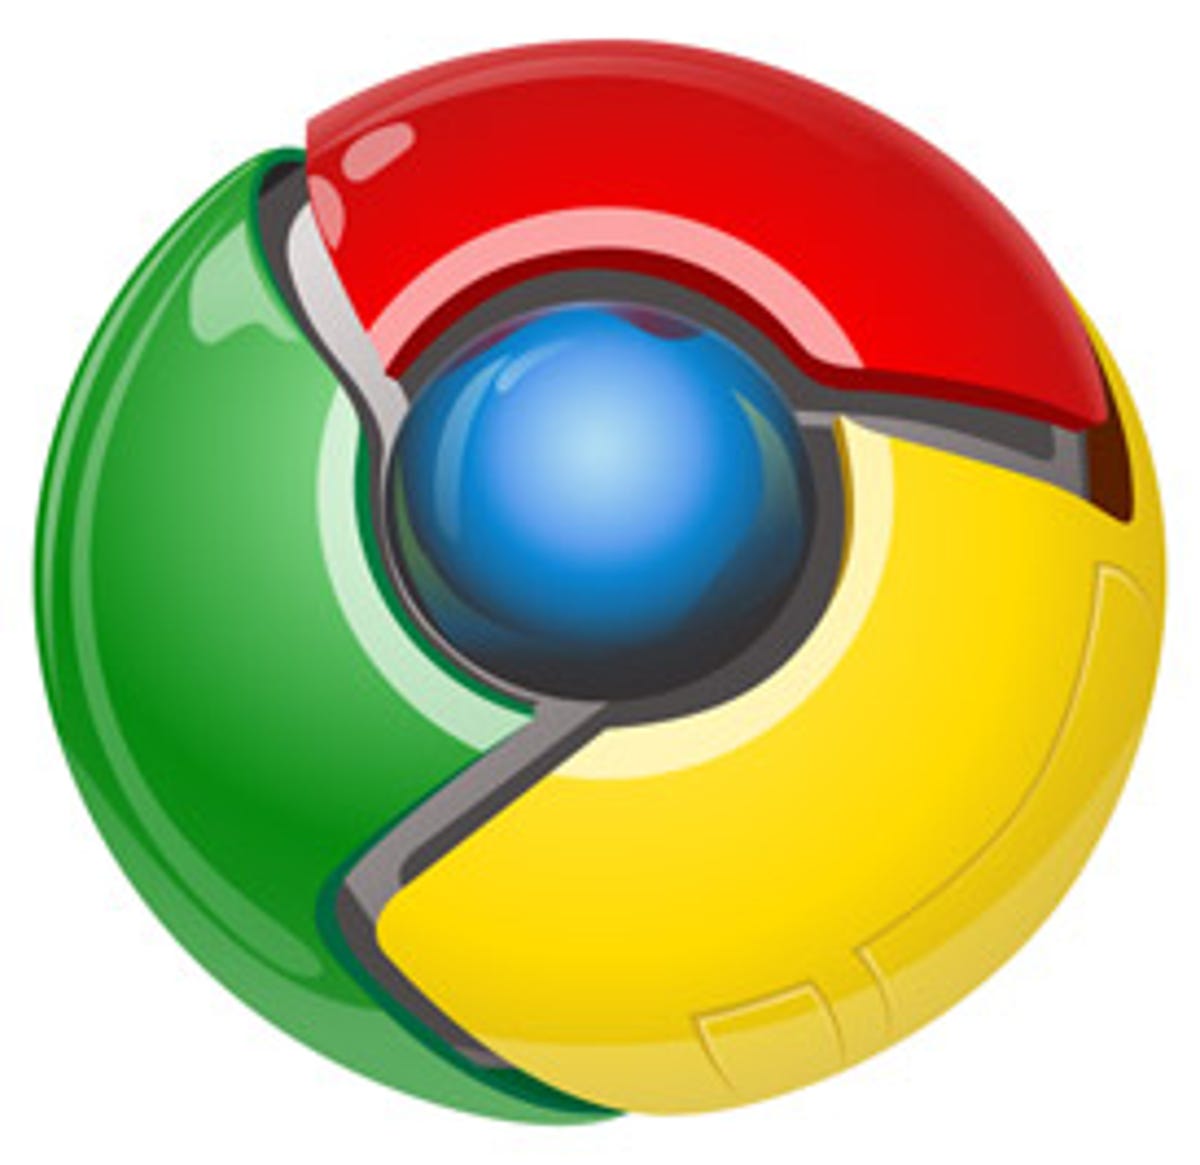 Today's Chrome logo